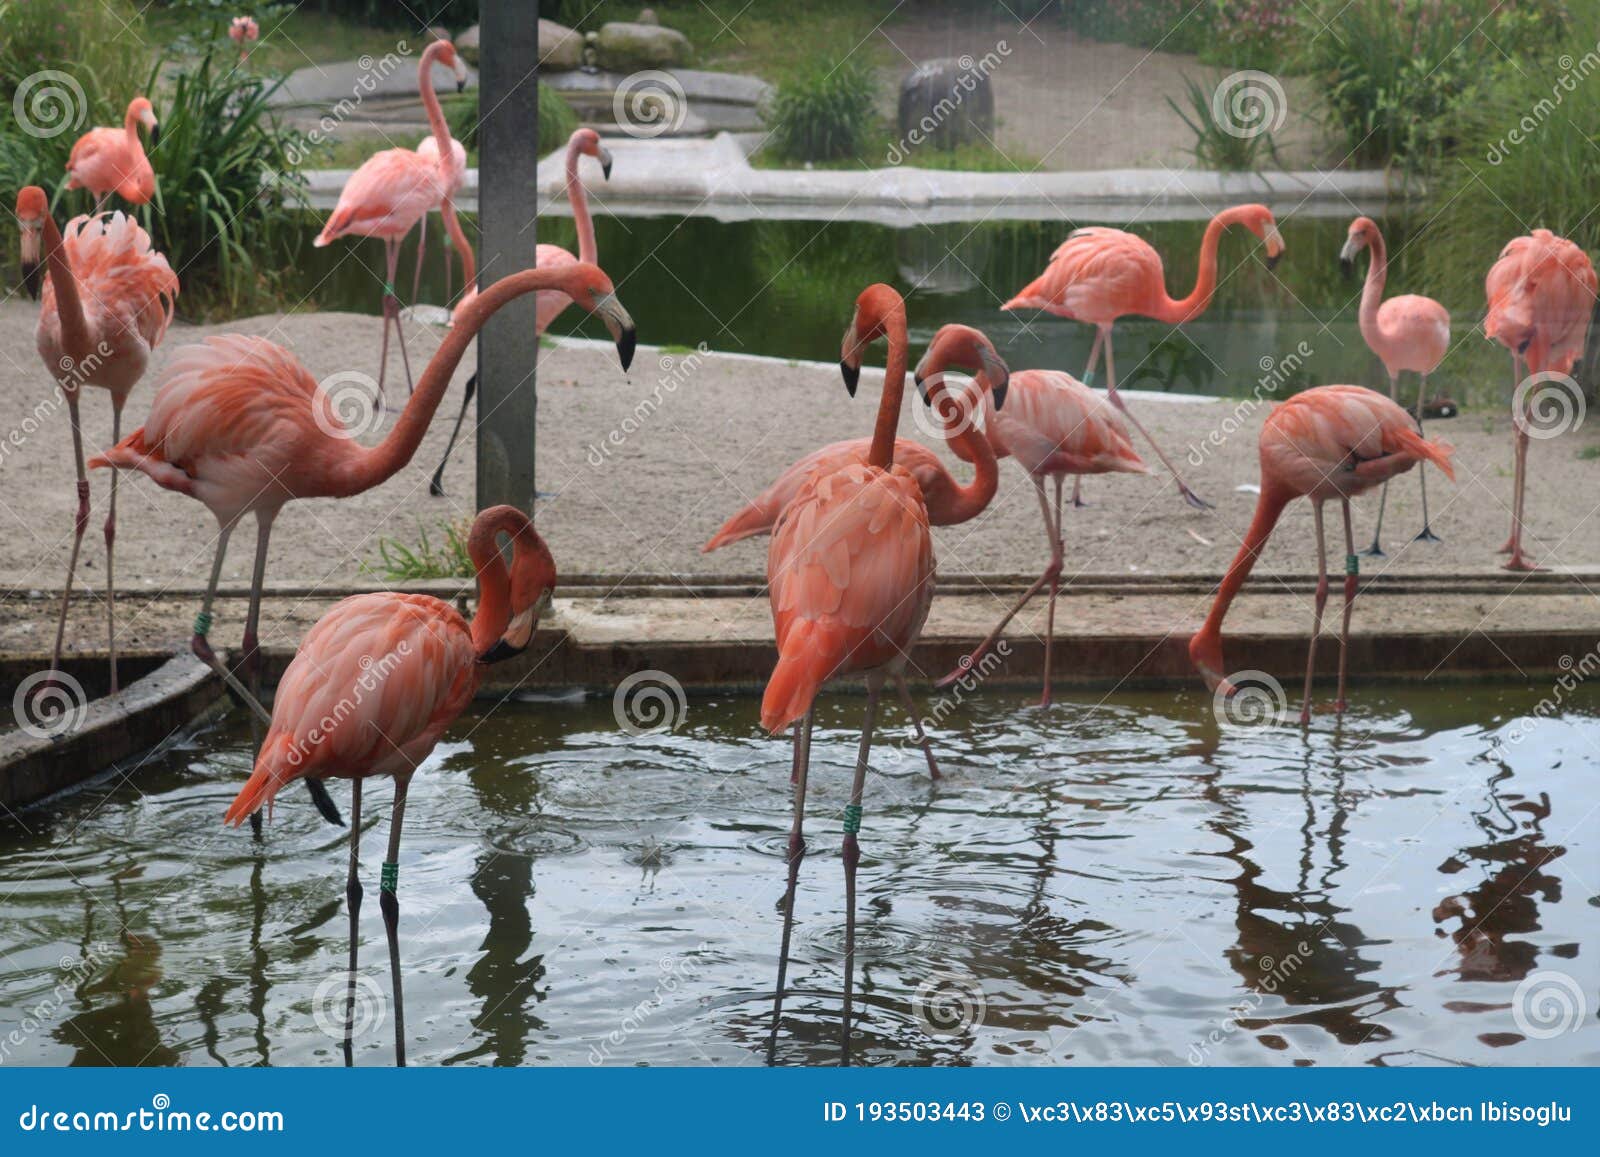 Beautiful Flamingos in the Copenhagen, Editorial - Image of nature, bird: 193503443